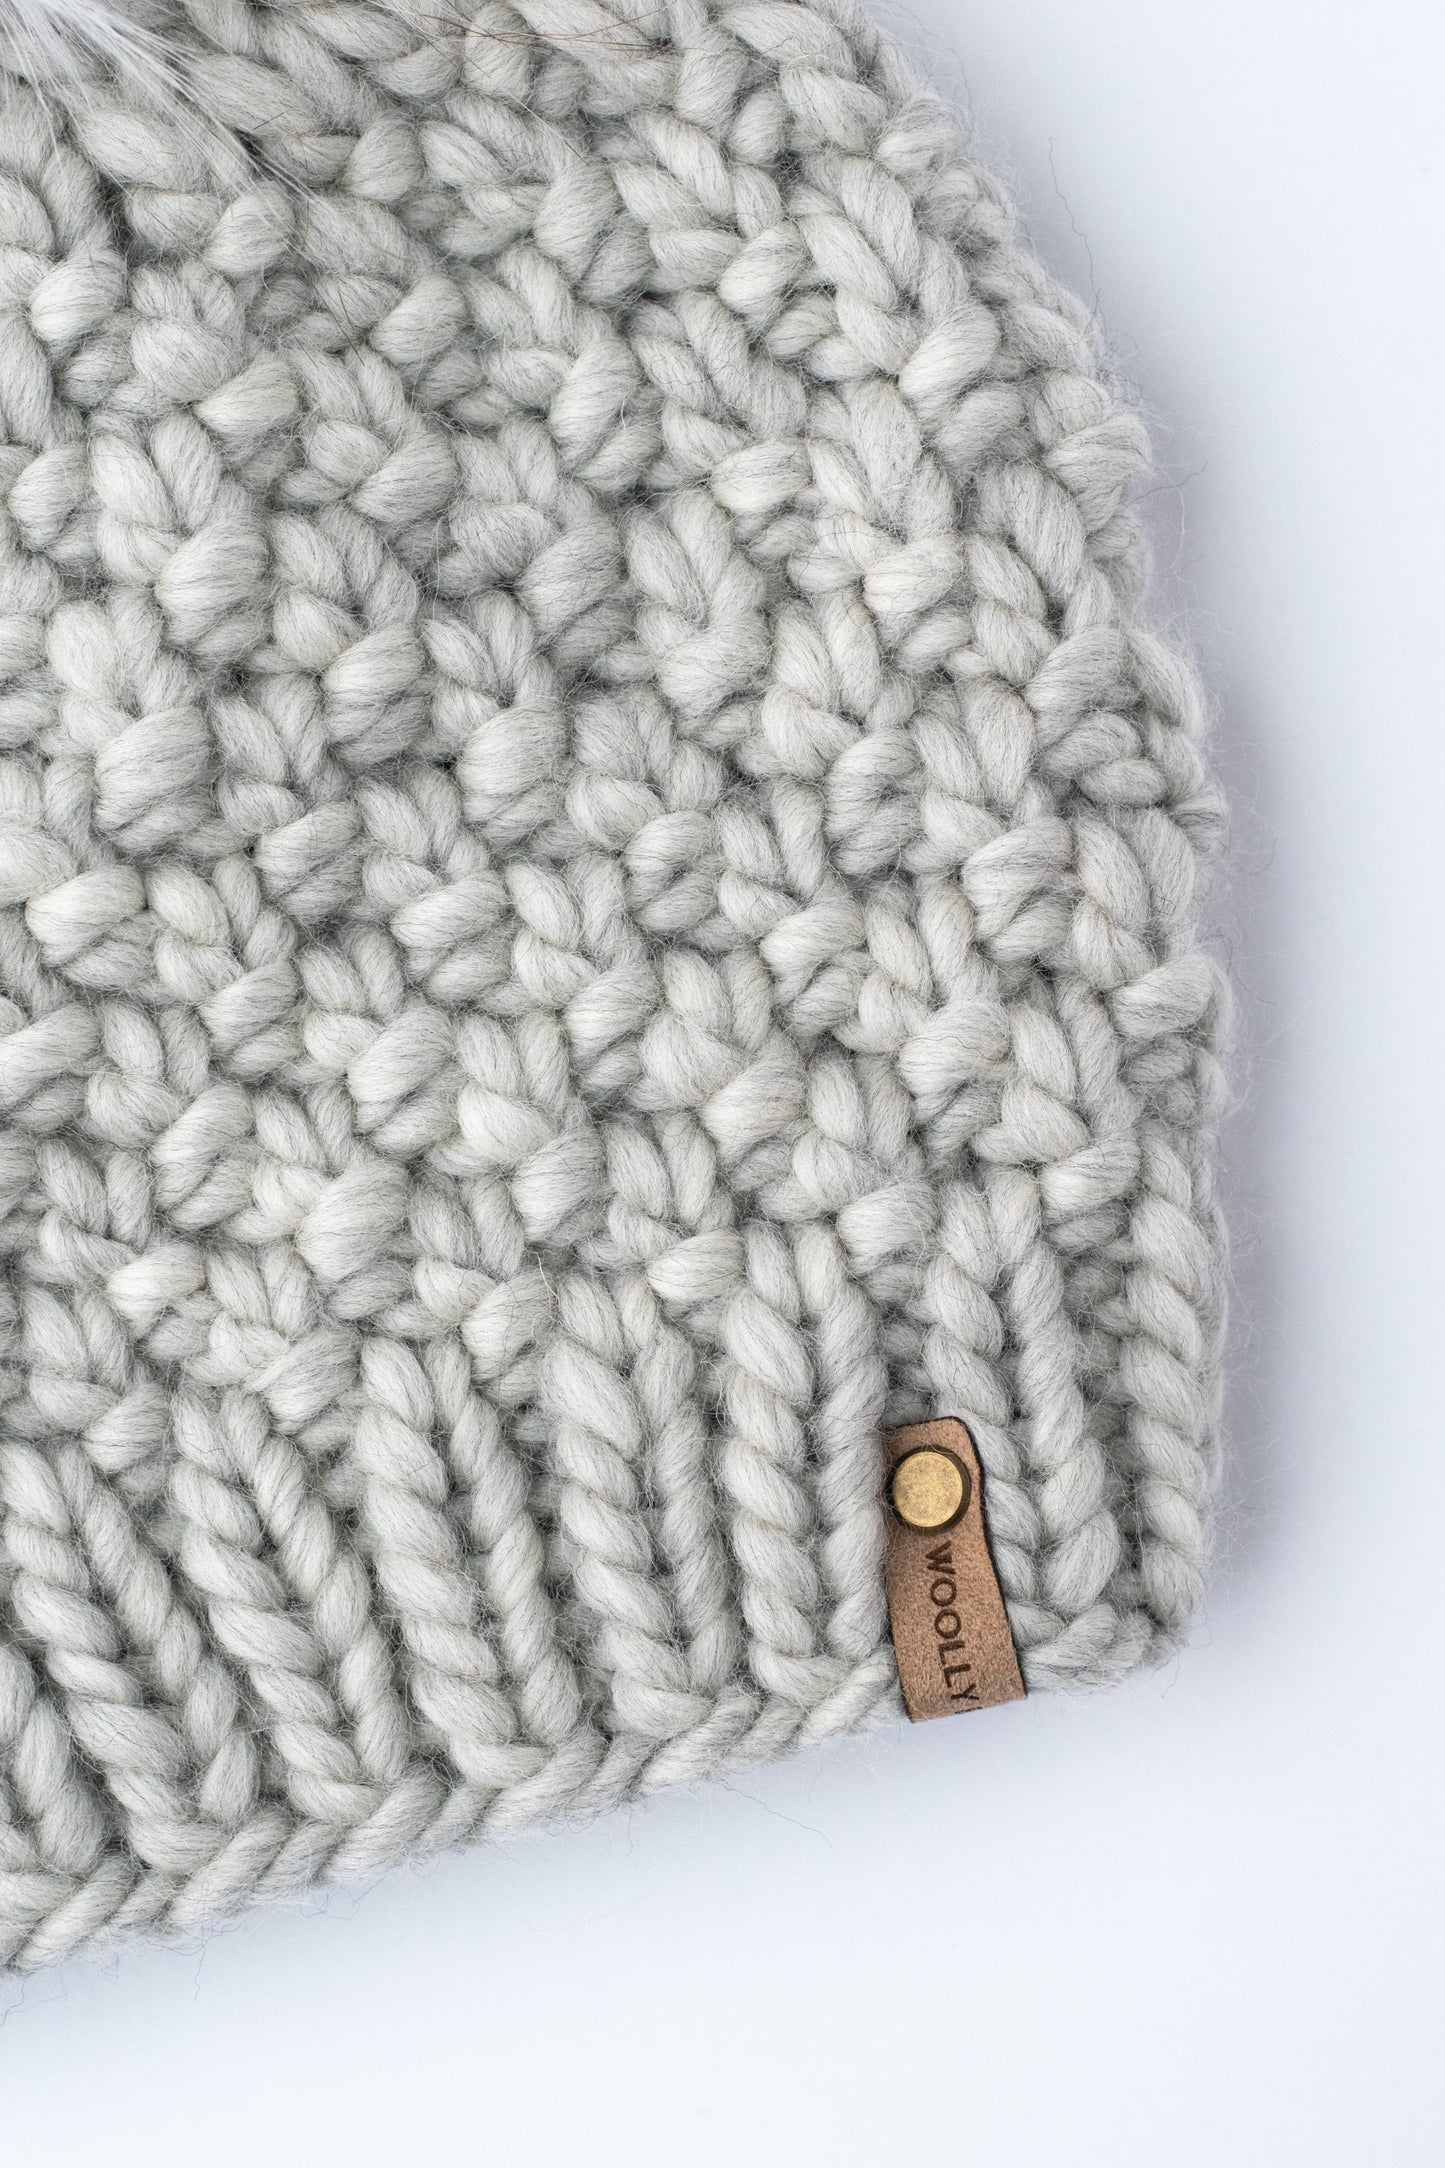 Light Gray Peruvian Wool Knit Hat with Faux Fur Pom Pom